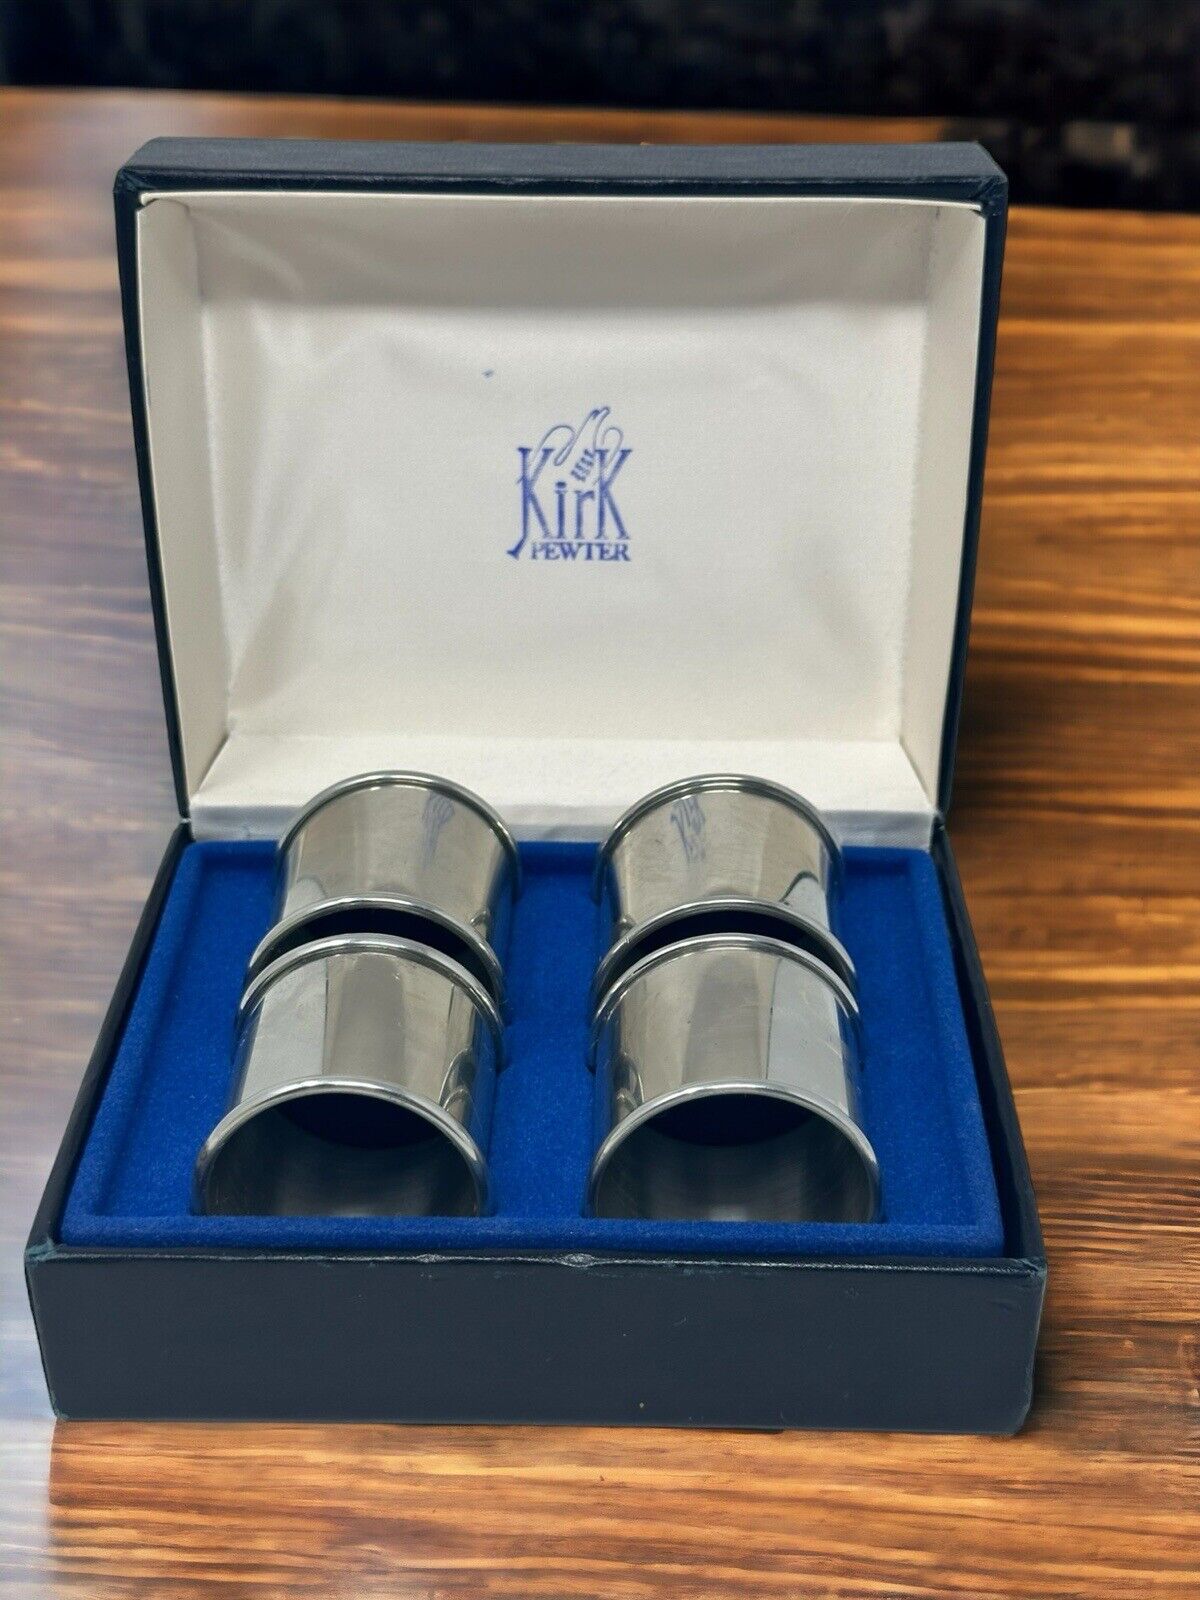 Vintage Kirk Pewter Napkin Rings Set in Original Box